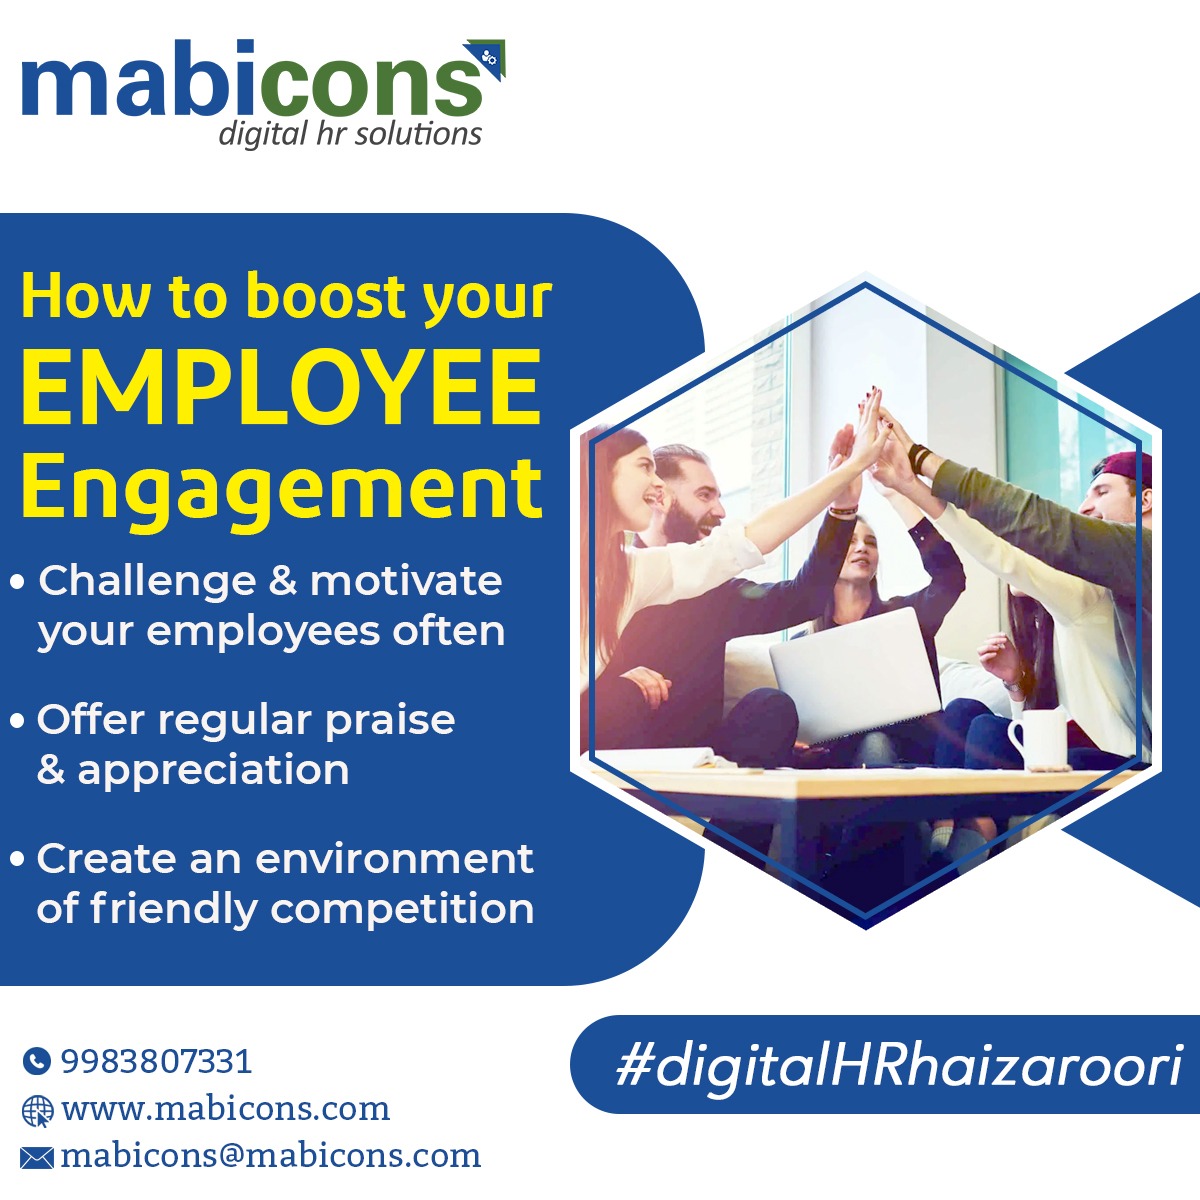 How to boost your Employee Engagement.
.
.
.
.
.#HR #MAbicons #JOBSEARCH #JOB #PAYROLL
#TalentAcquisition
#EmployeeLifeCycle #PerformanceManagement
#TrainingDevelopment #OrganisationRestructing #digitalhrhaizaroori